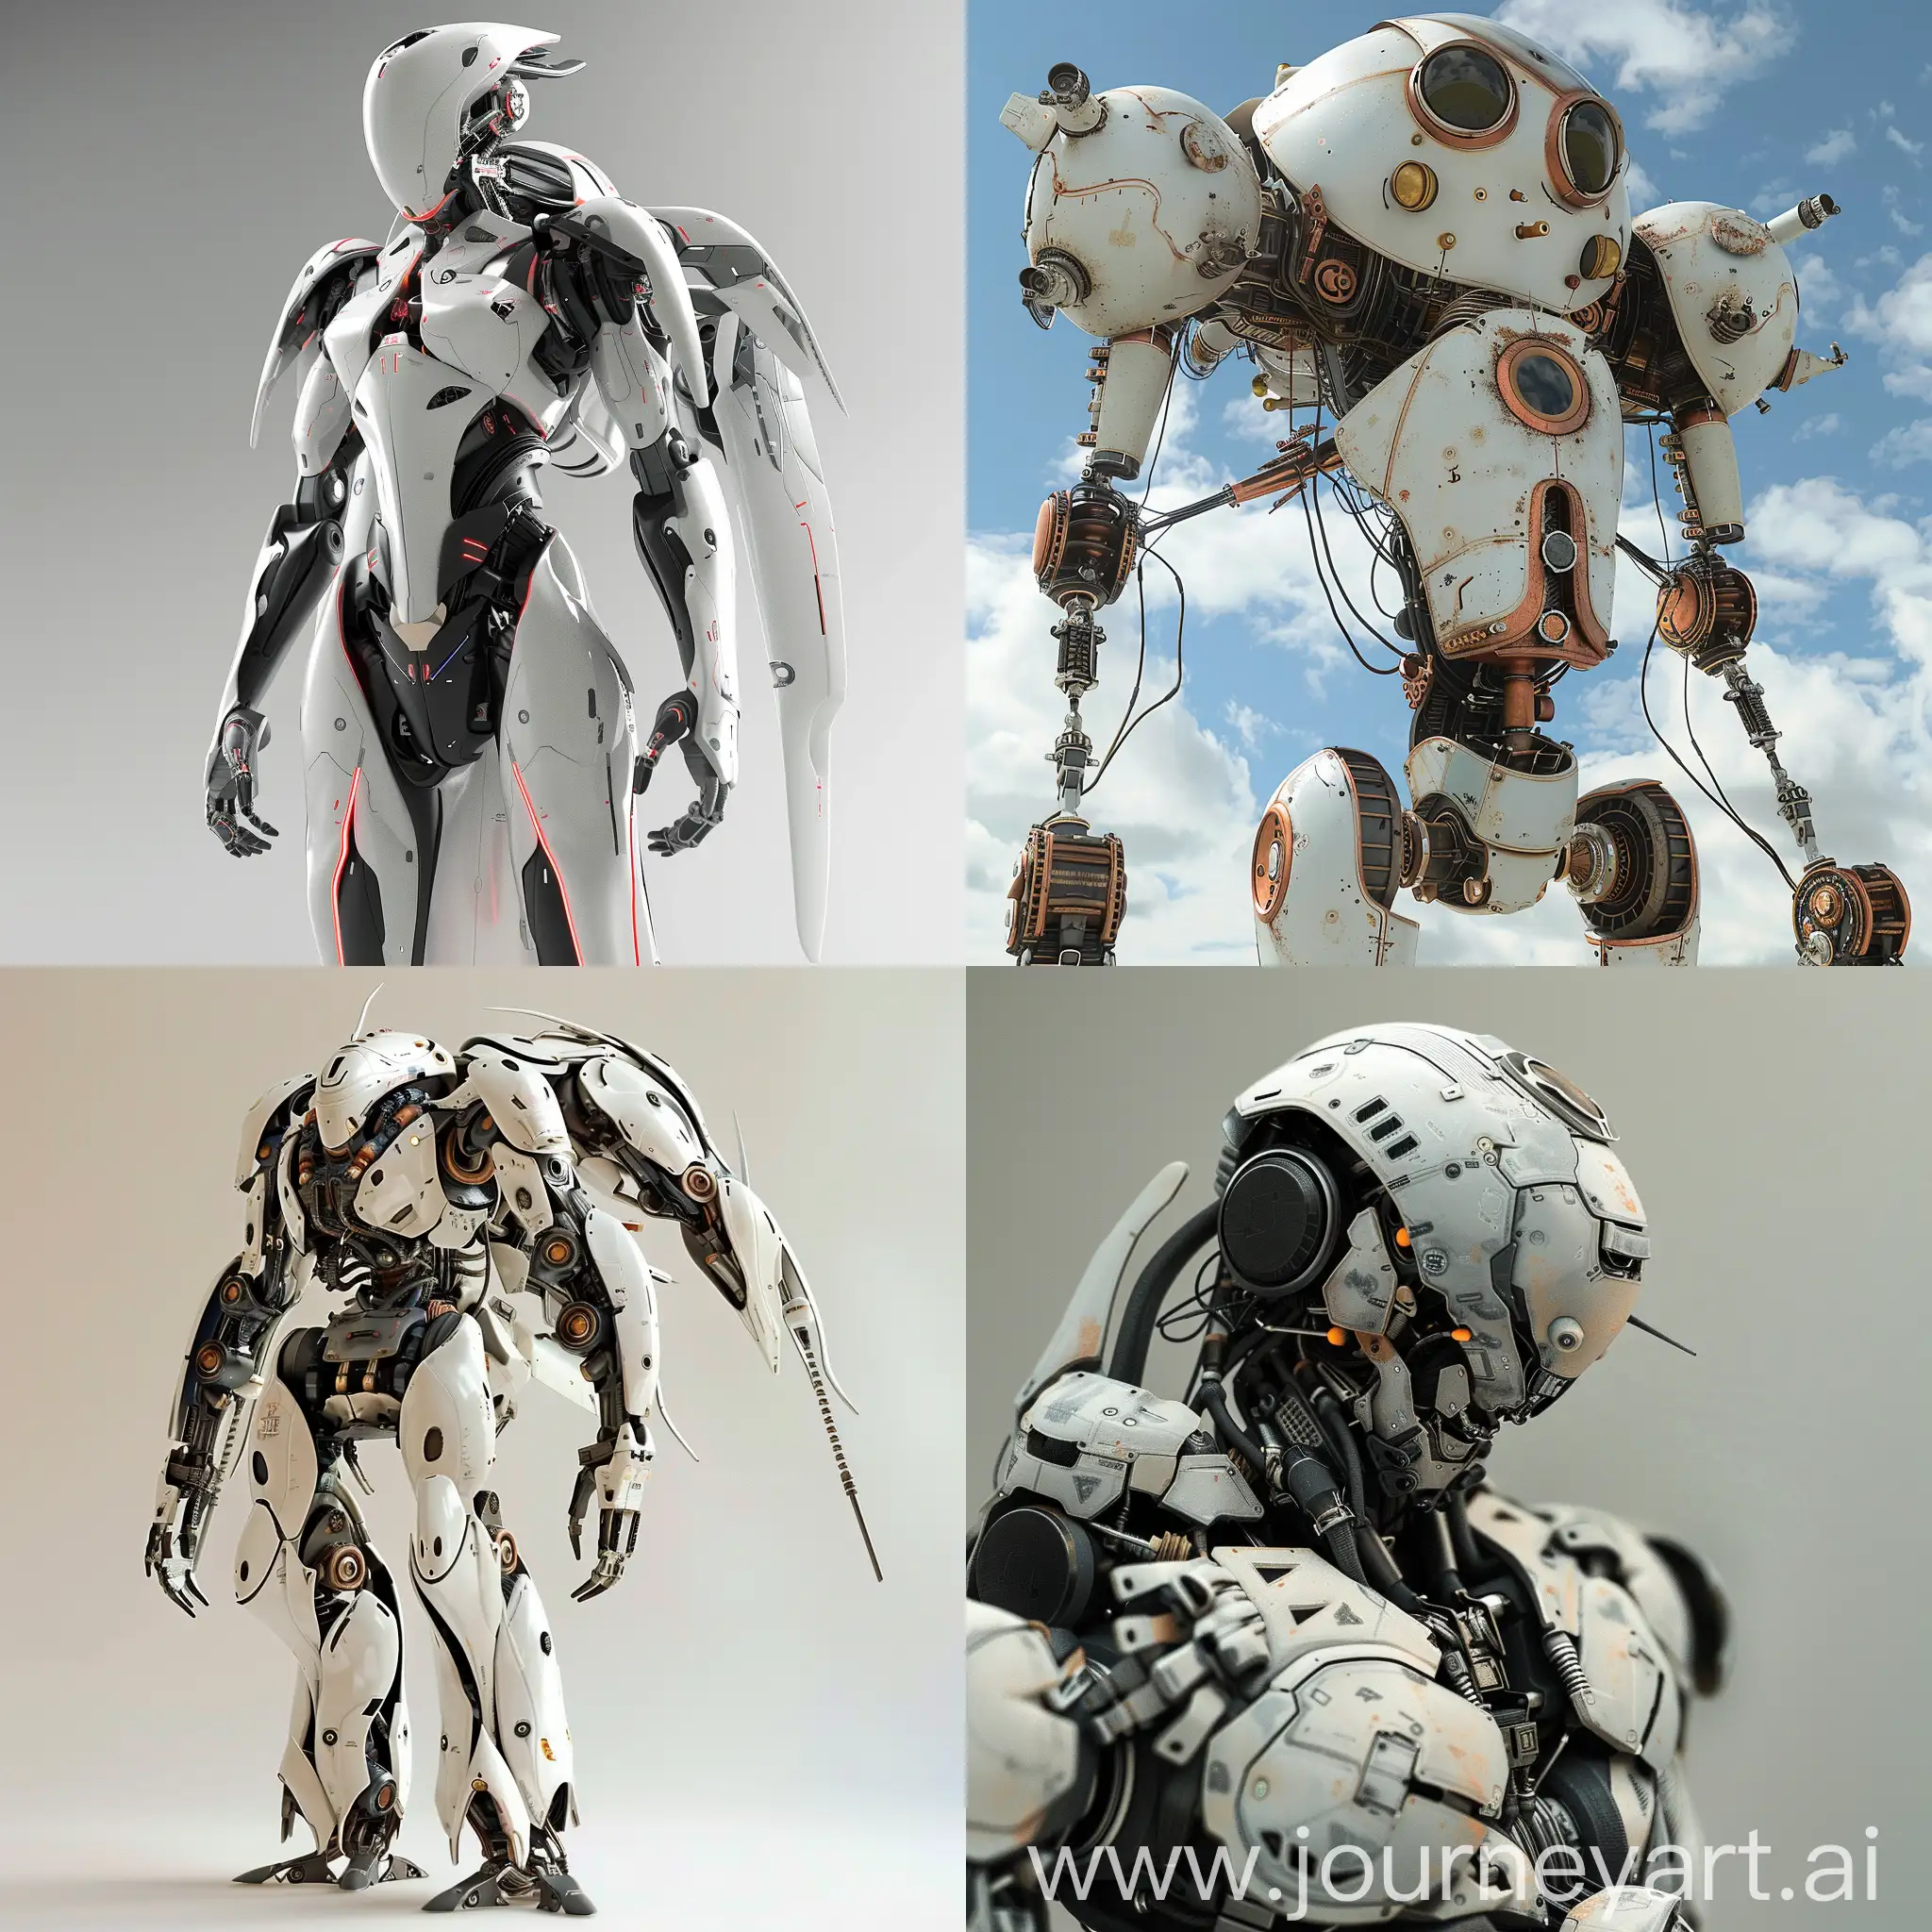 Futuristic-Aero-Robot-Art-Vintage-2007-Inspired-Design